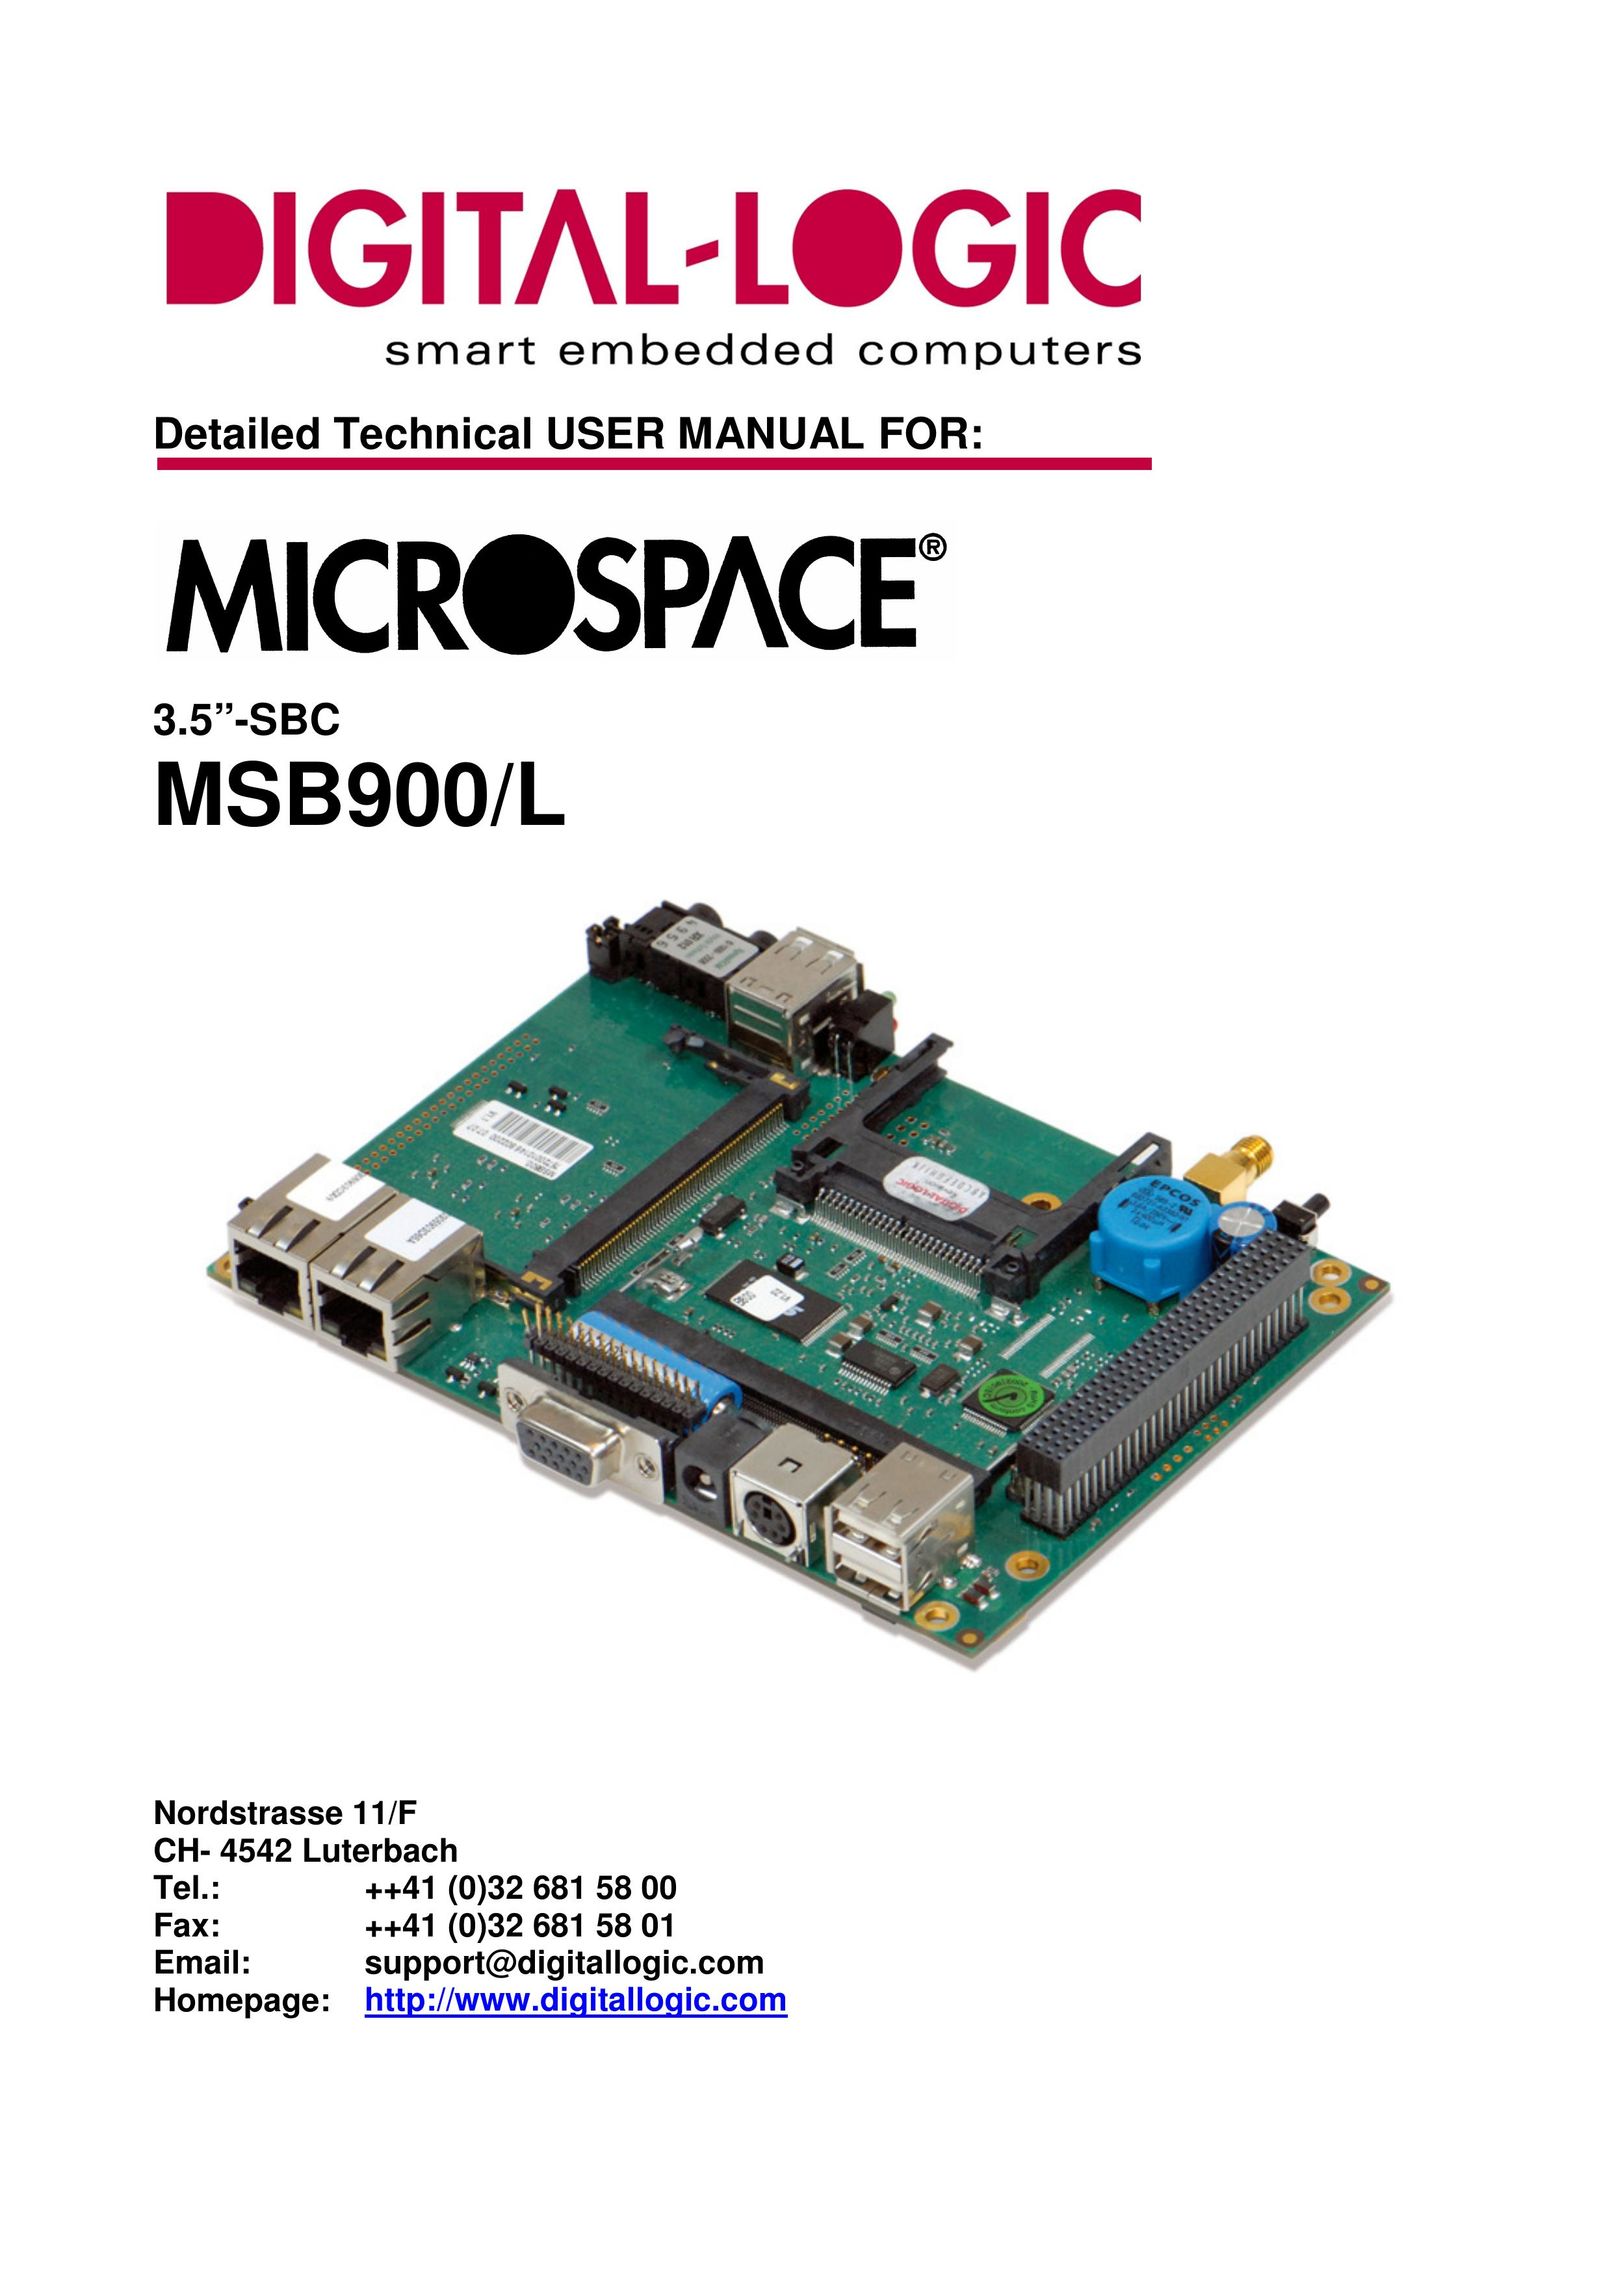 Compaq MSB900L Computer Hardware User Manual